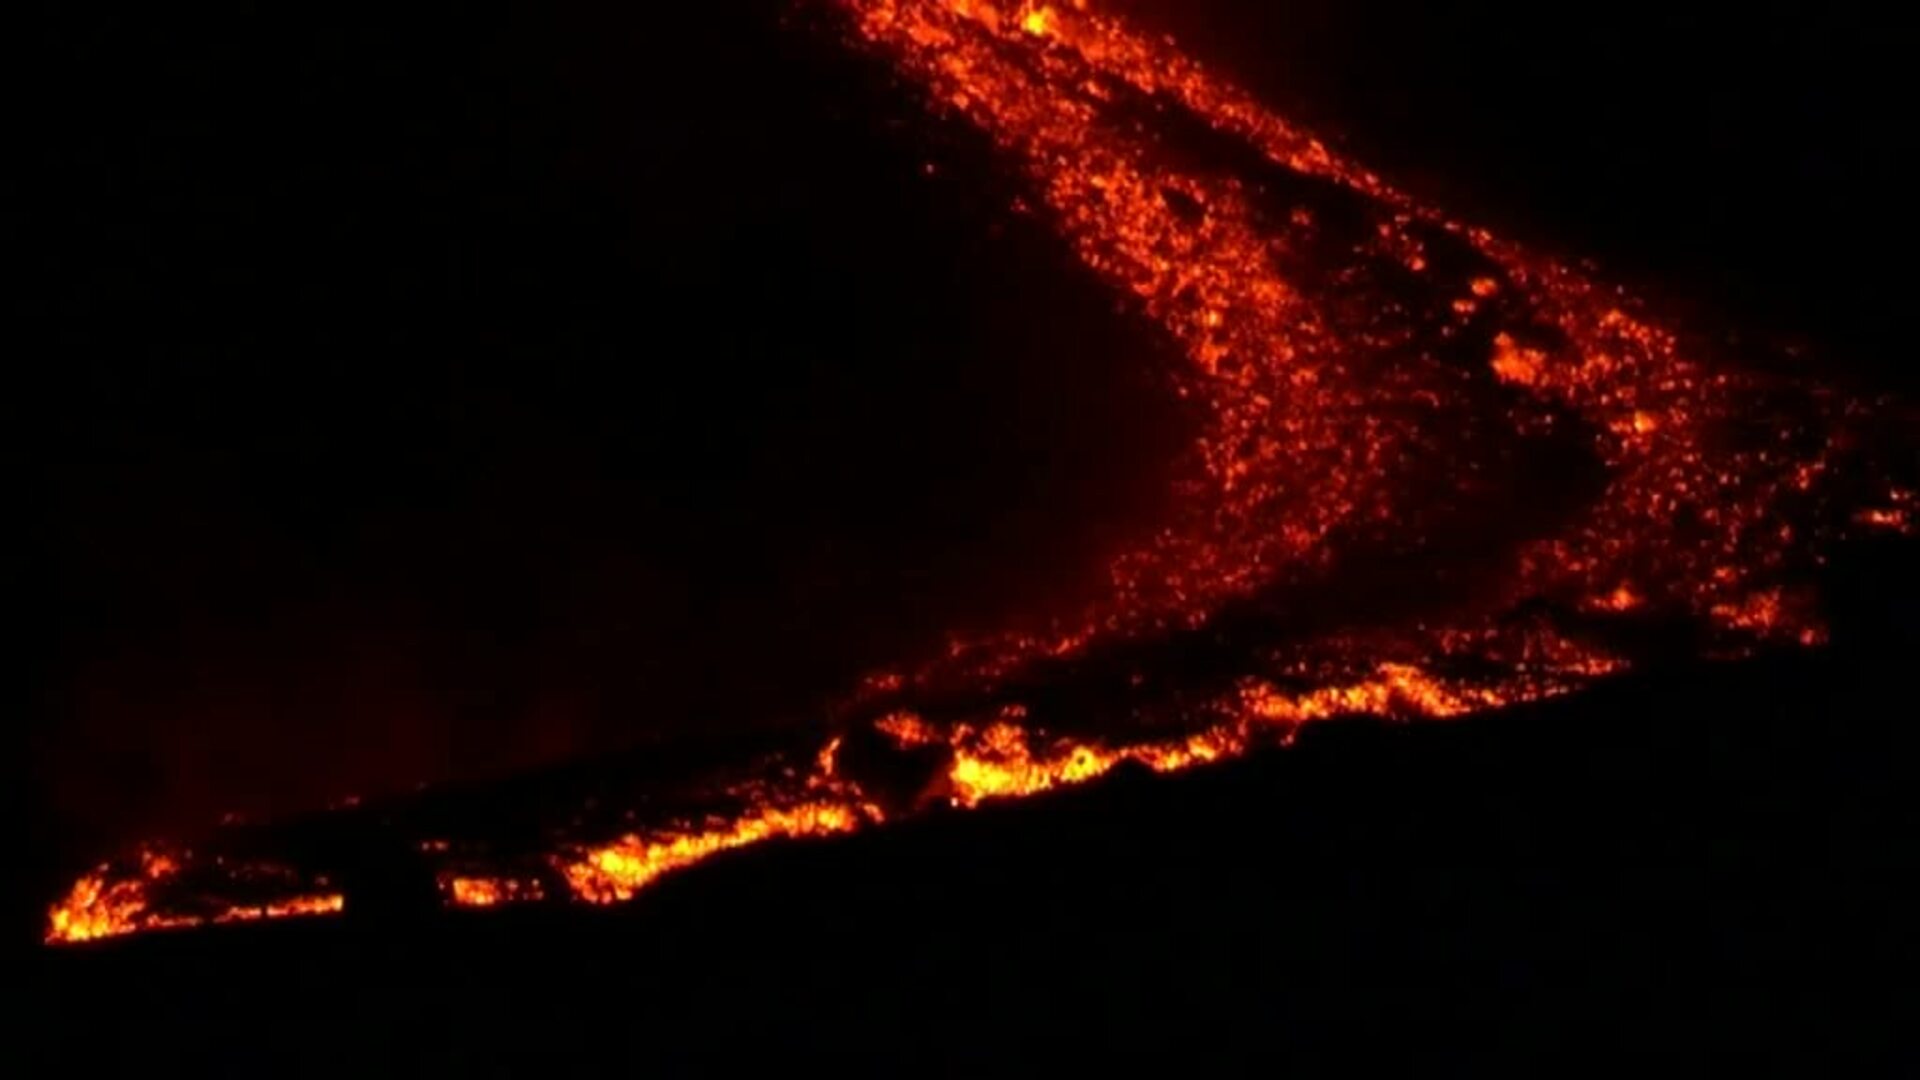 El volcán Etna expulsa lava con fuerza